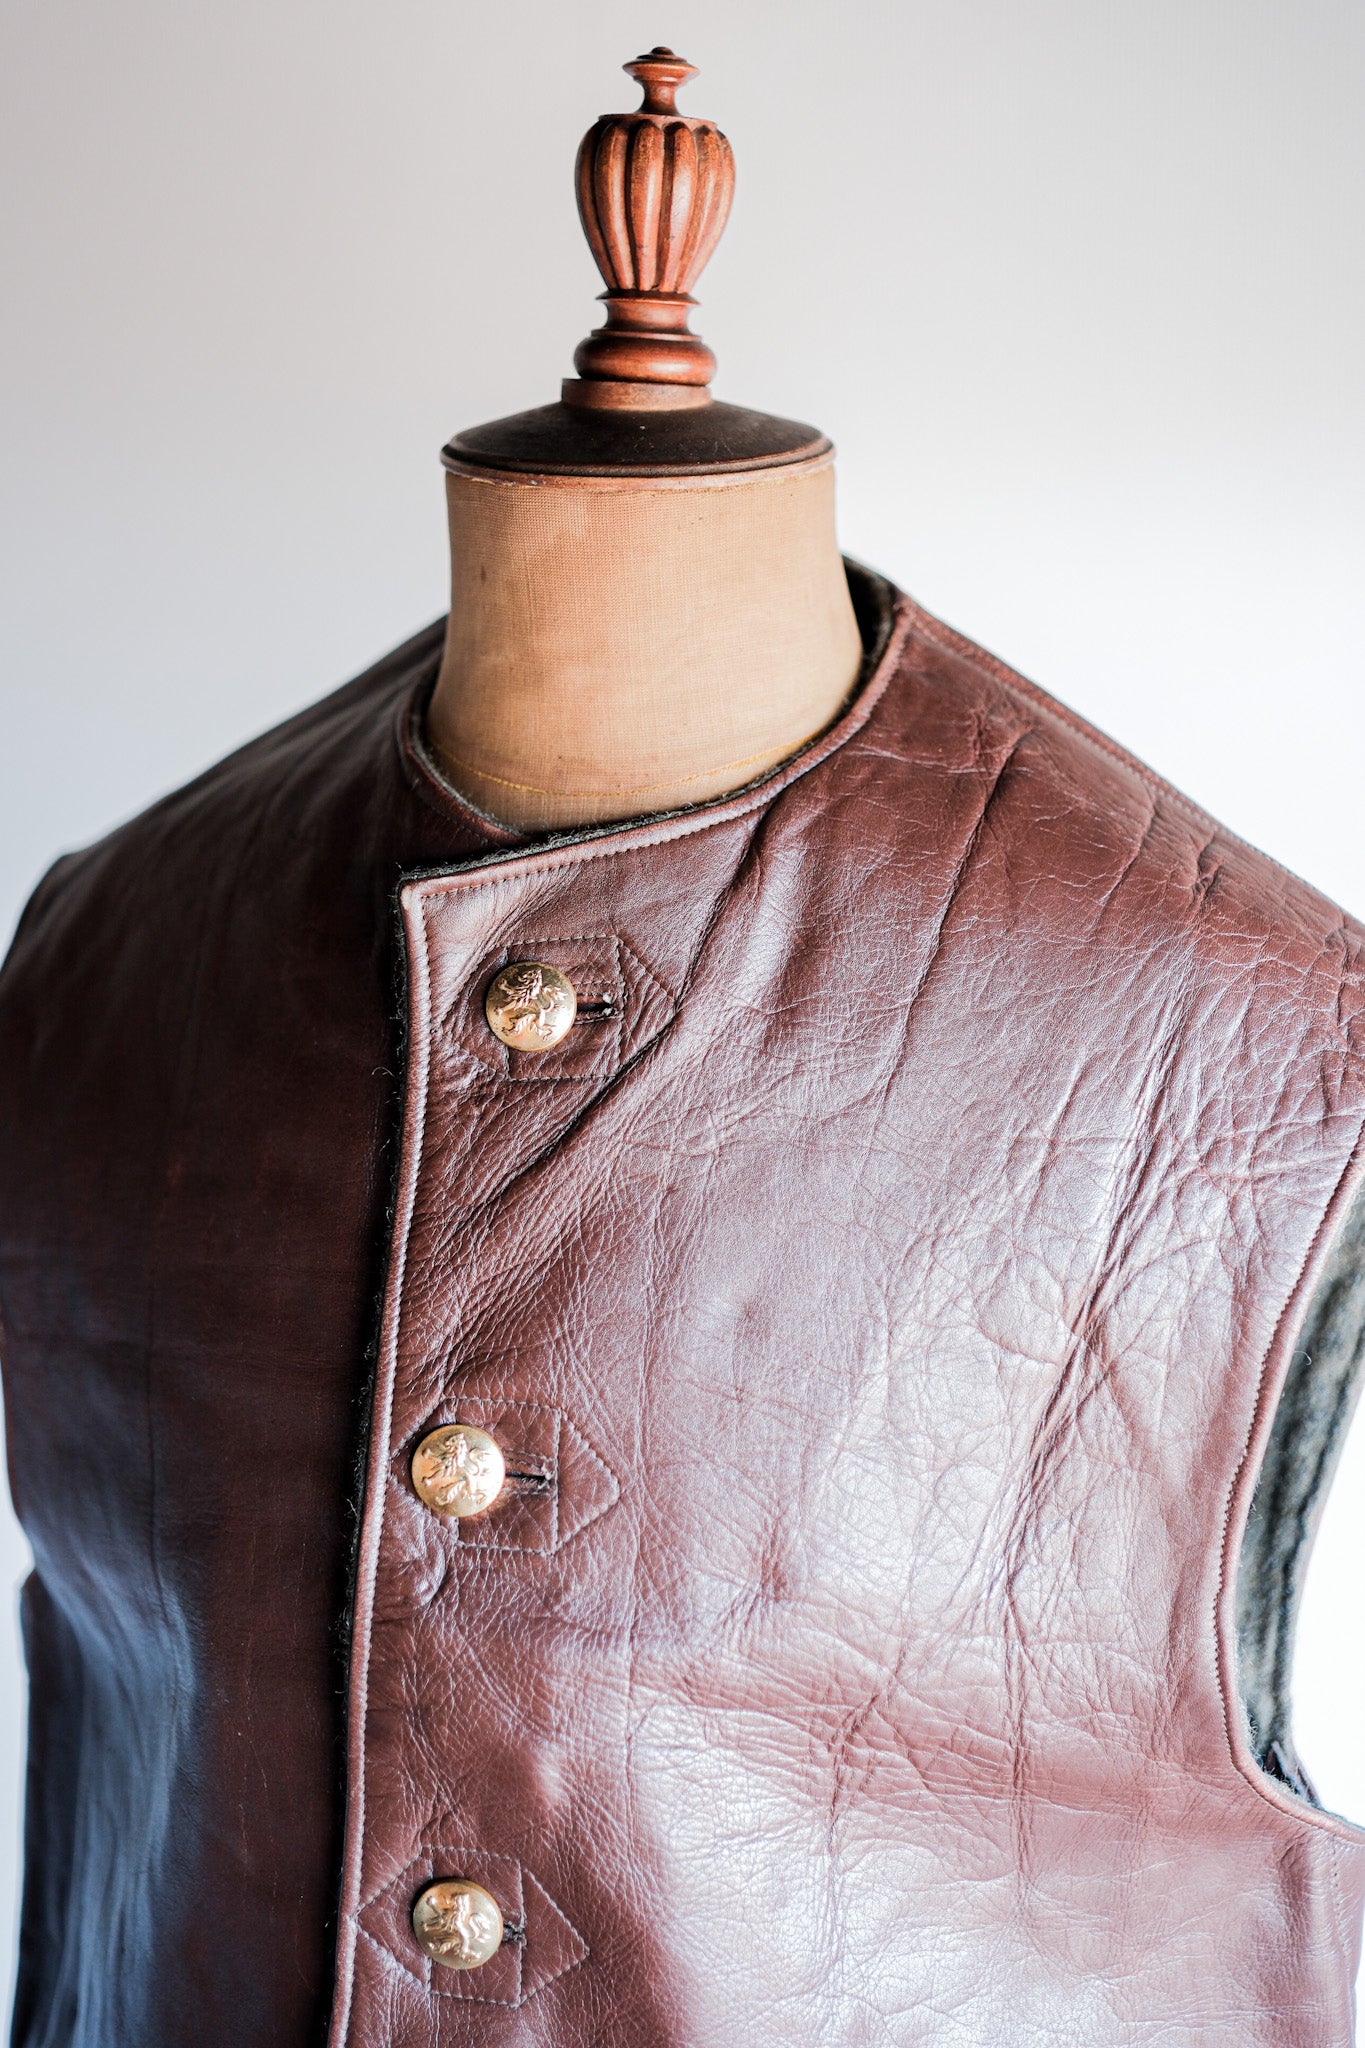 【~50's】Belgian Army Jerkin Leather Vest